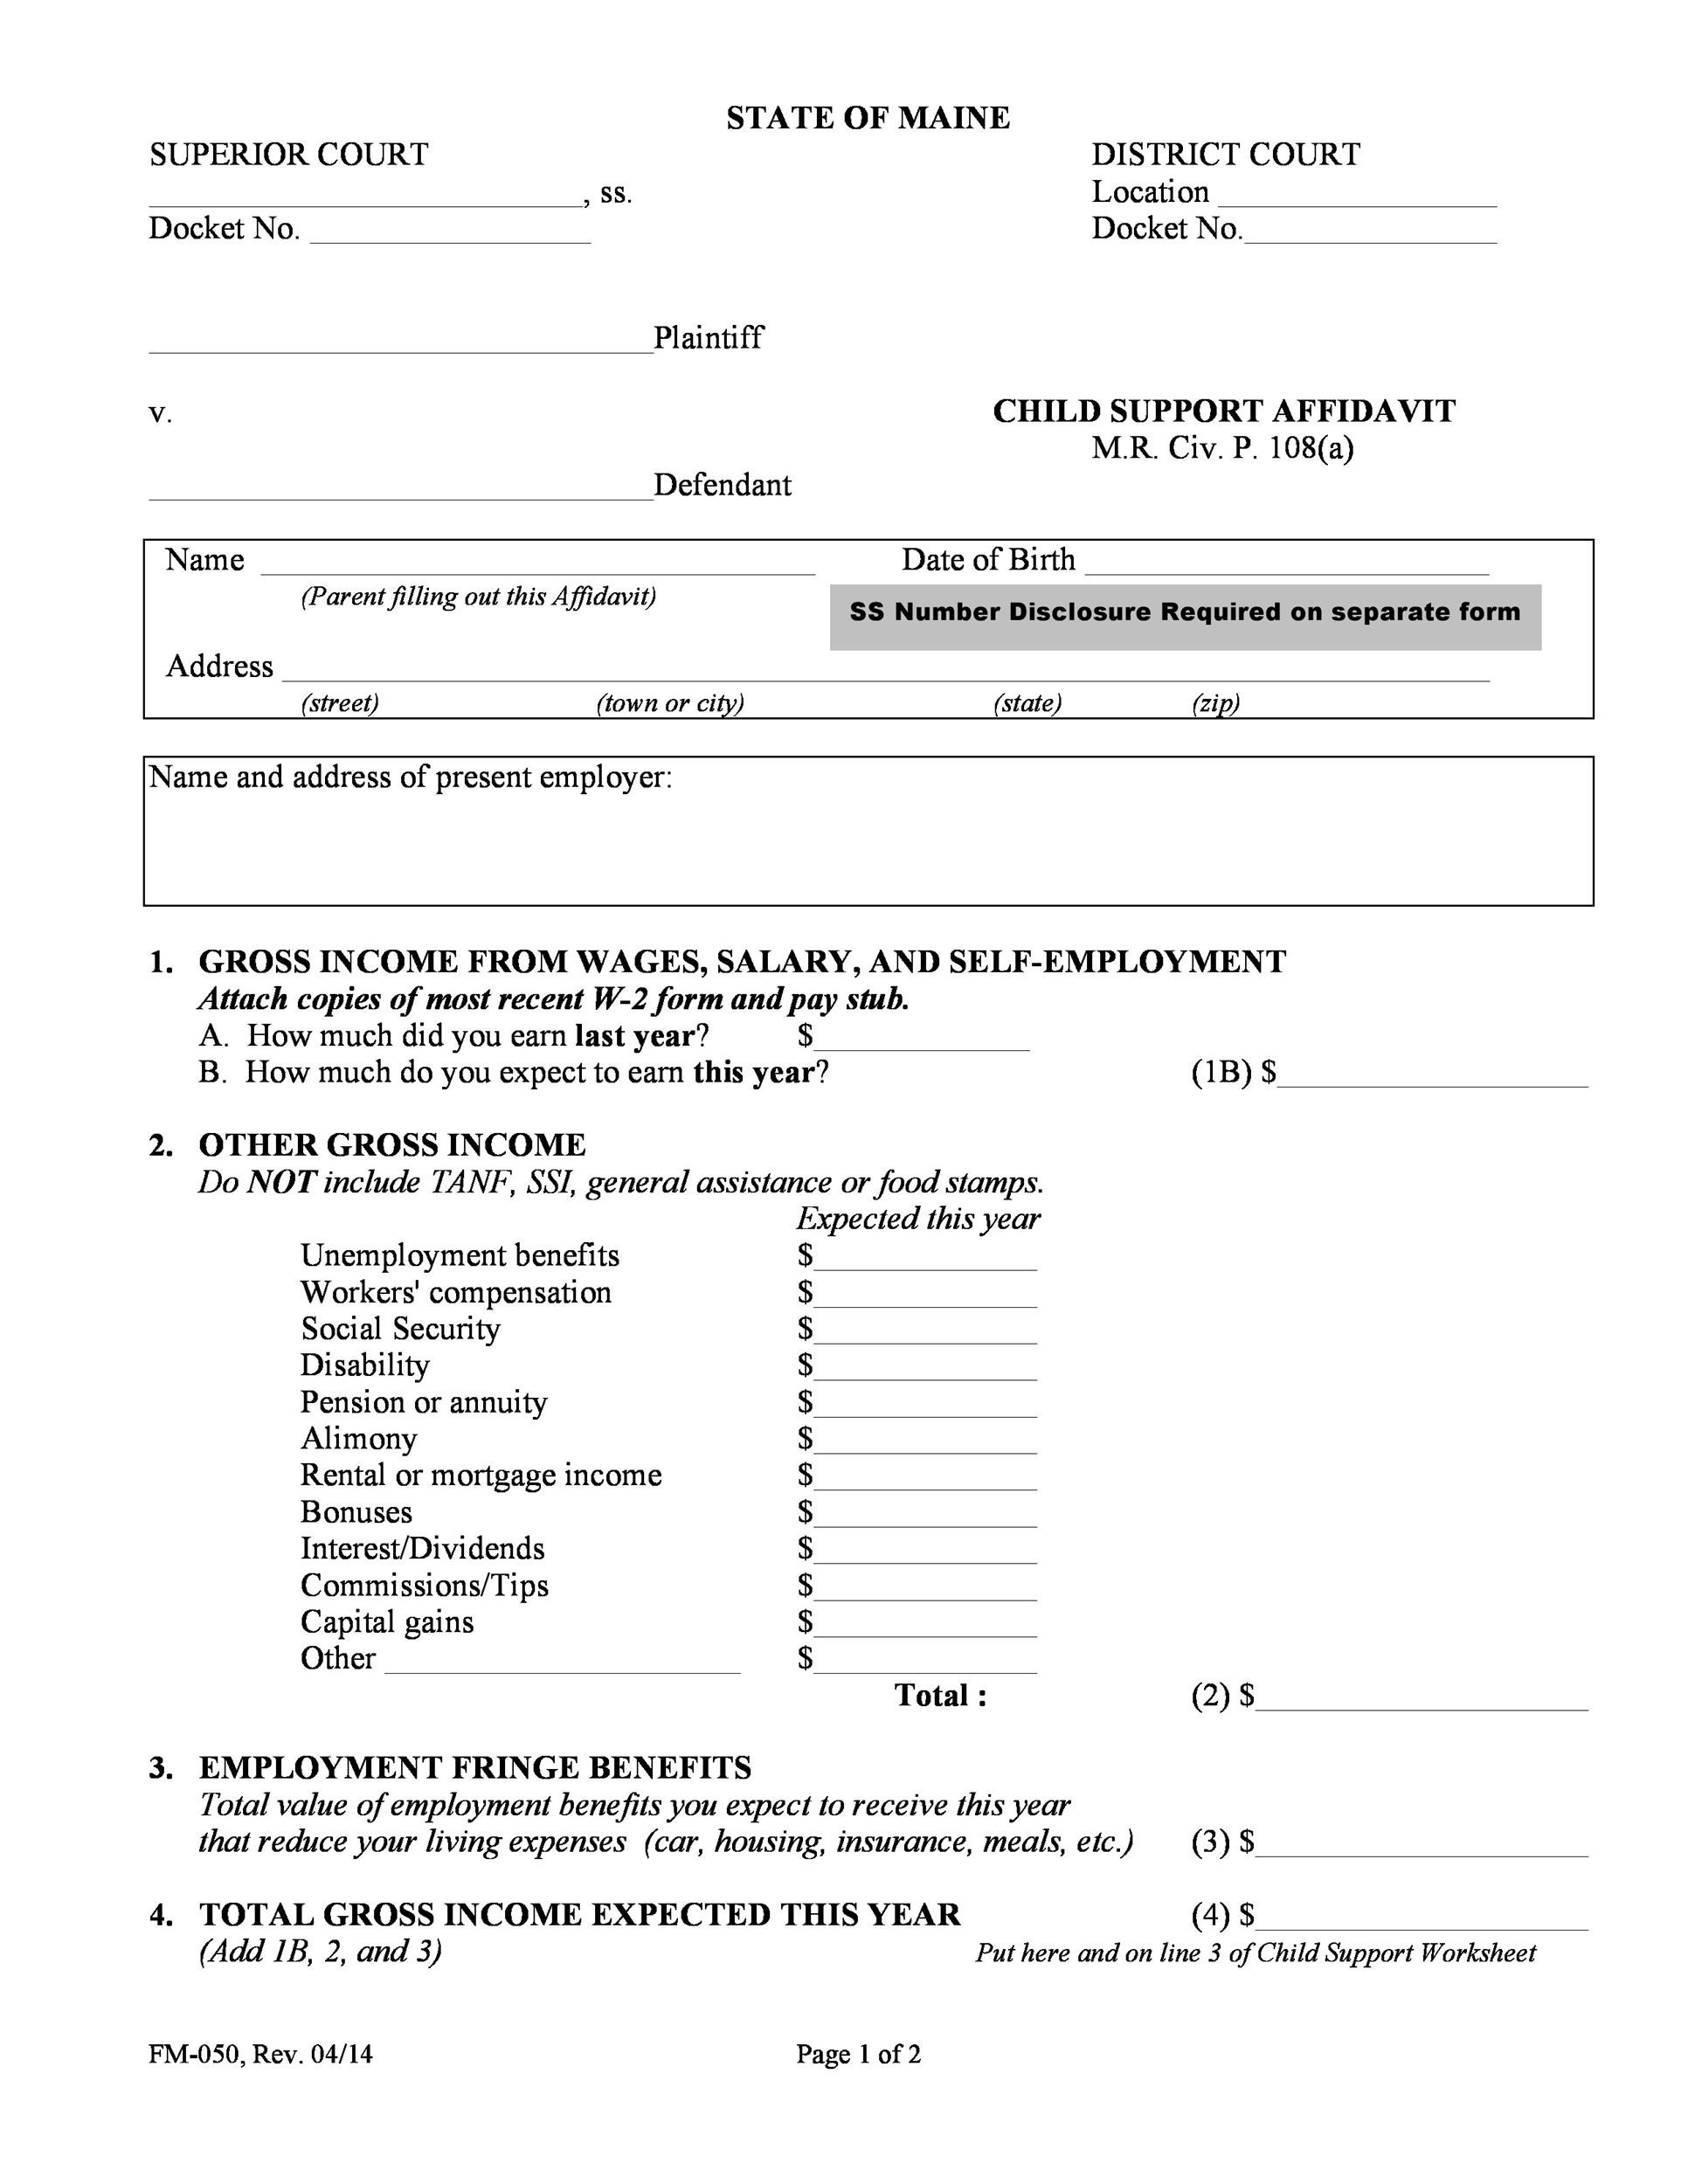 Free affidavit form 24